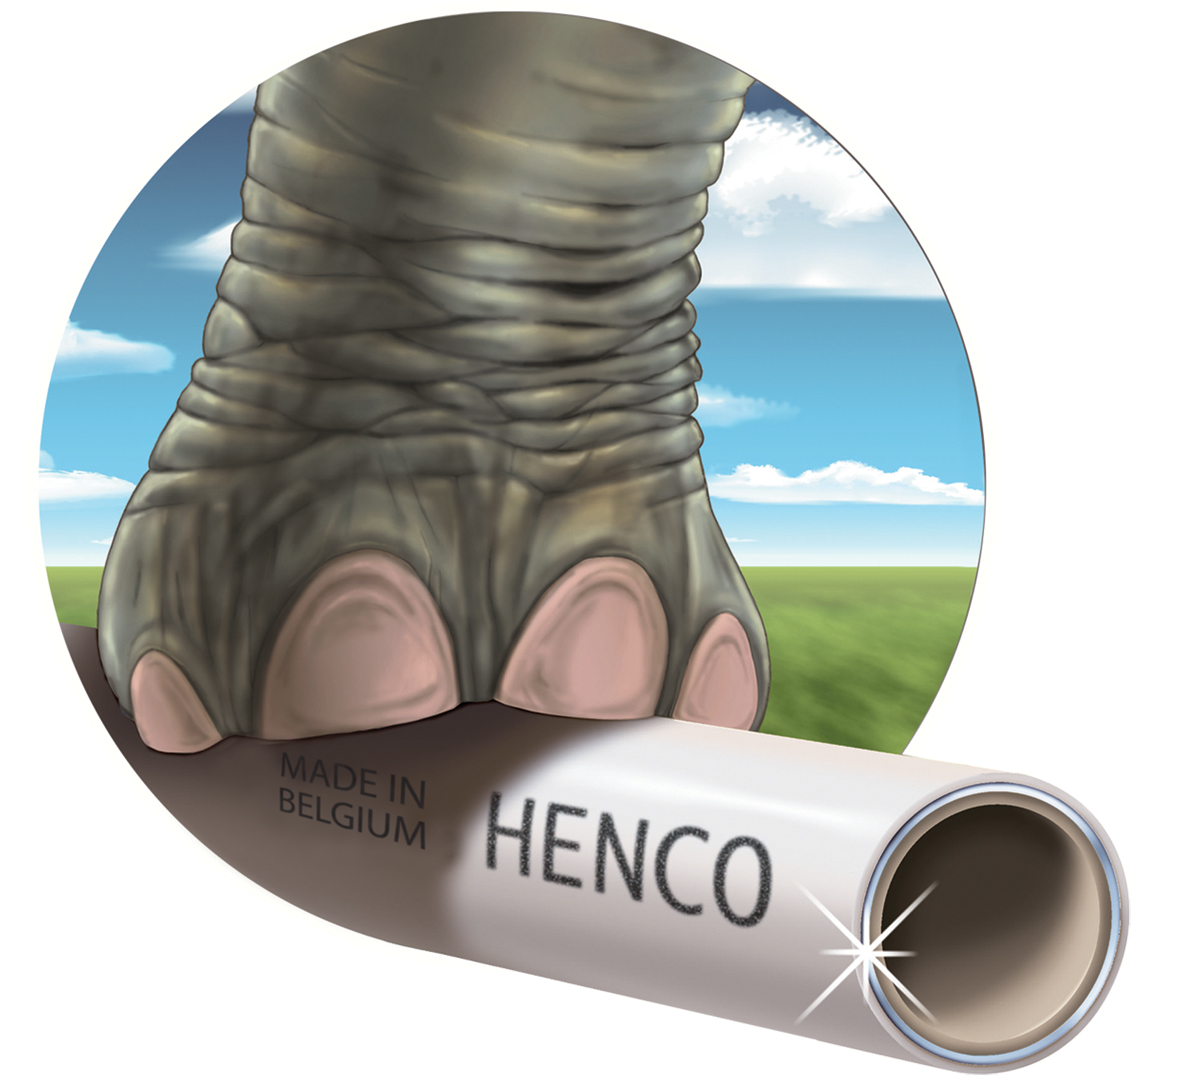 Henco Industries NV